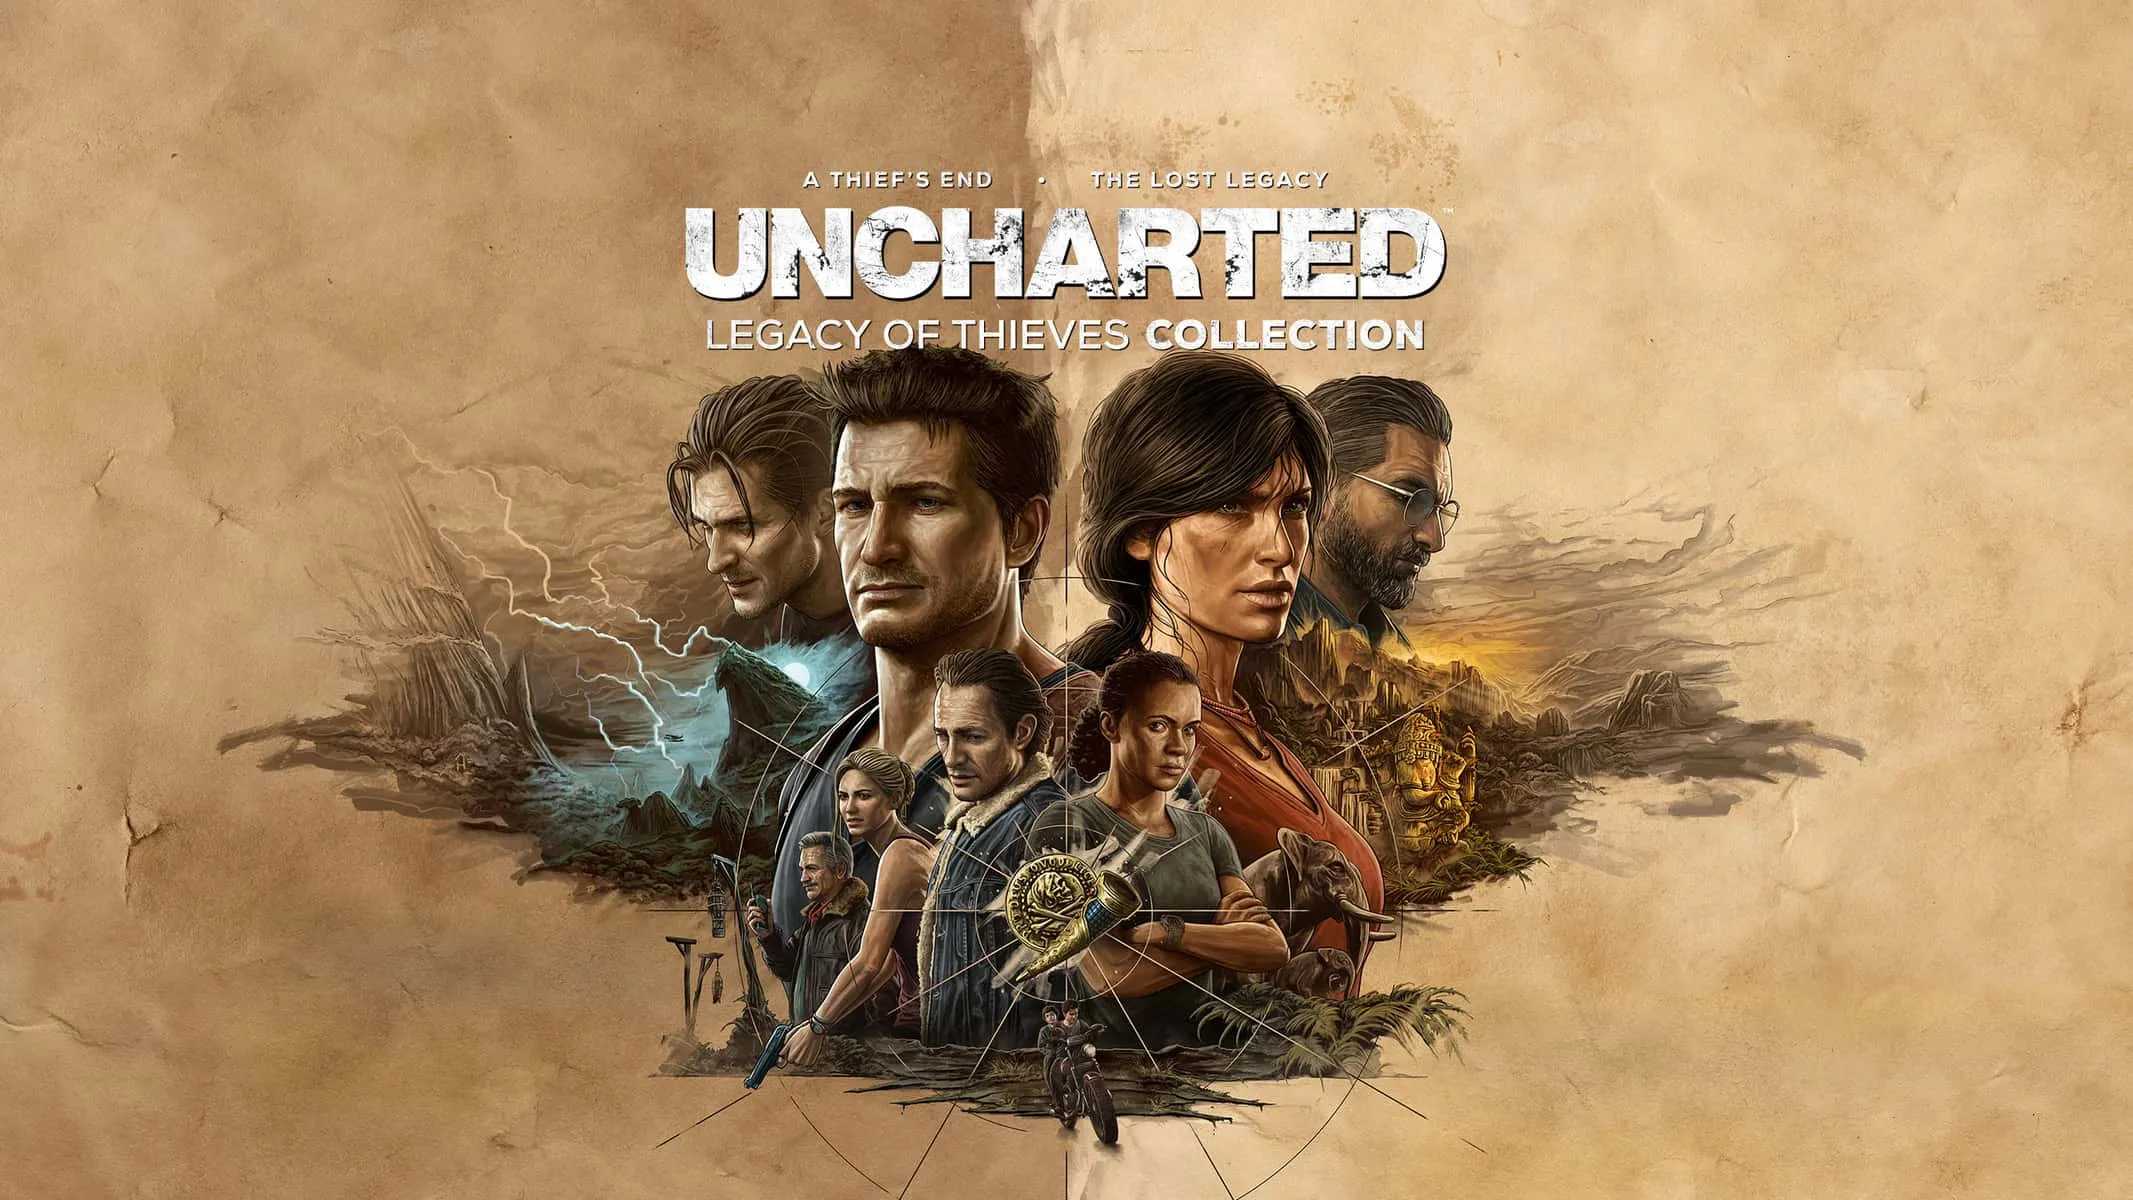 Uncharted: Legacy of Thieves Collection, билет в кино, предлагаемый вместе с сборником